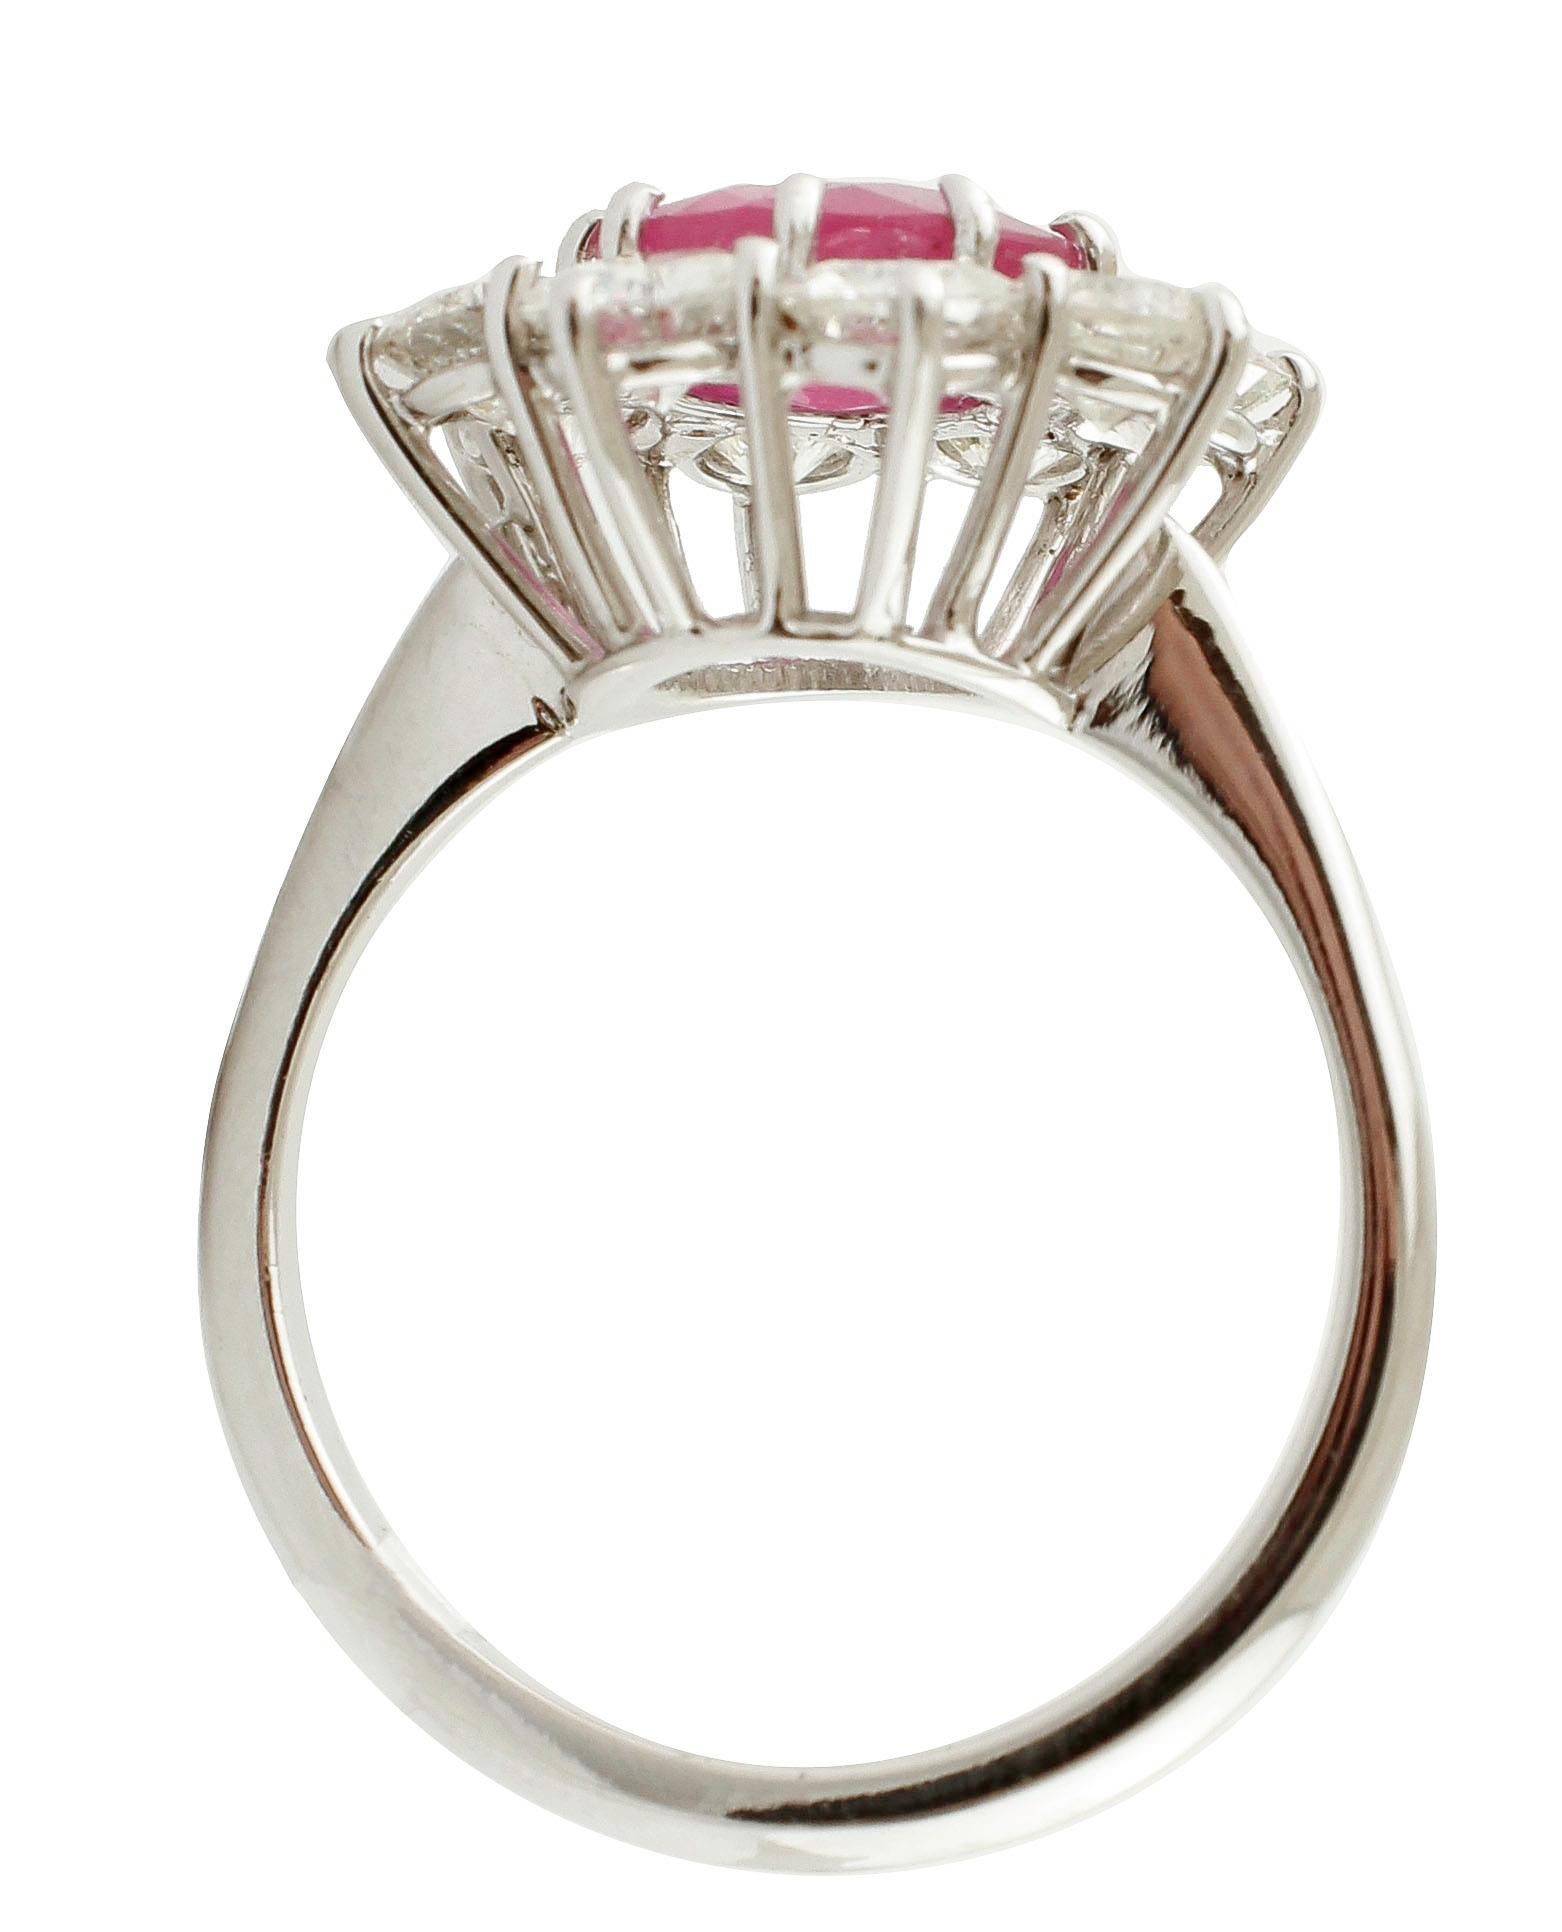 Brilliant Cut Ruby, White Diamonds, White Gold, Flower Shape Design Fashion Ring For Sale